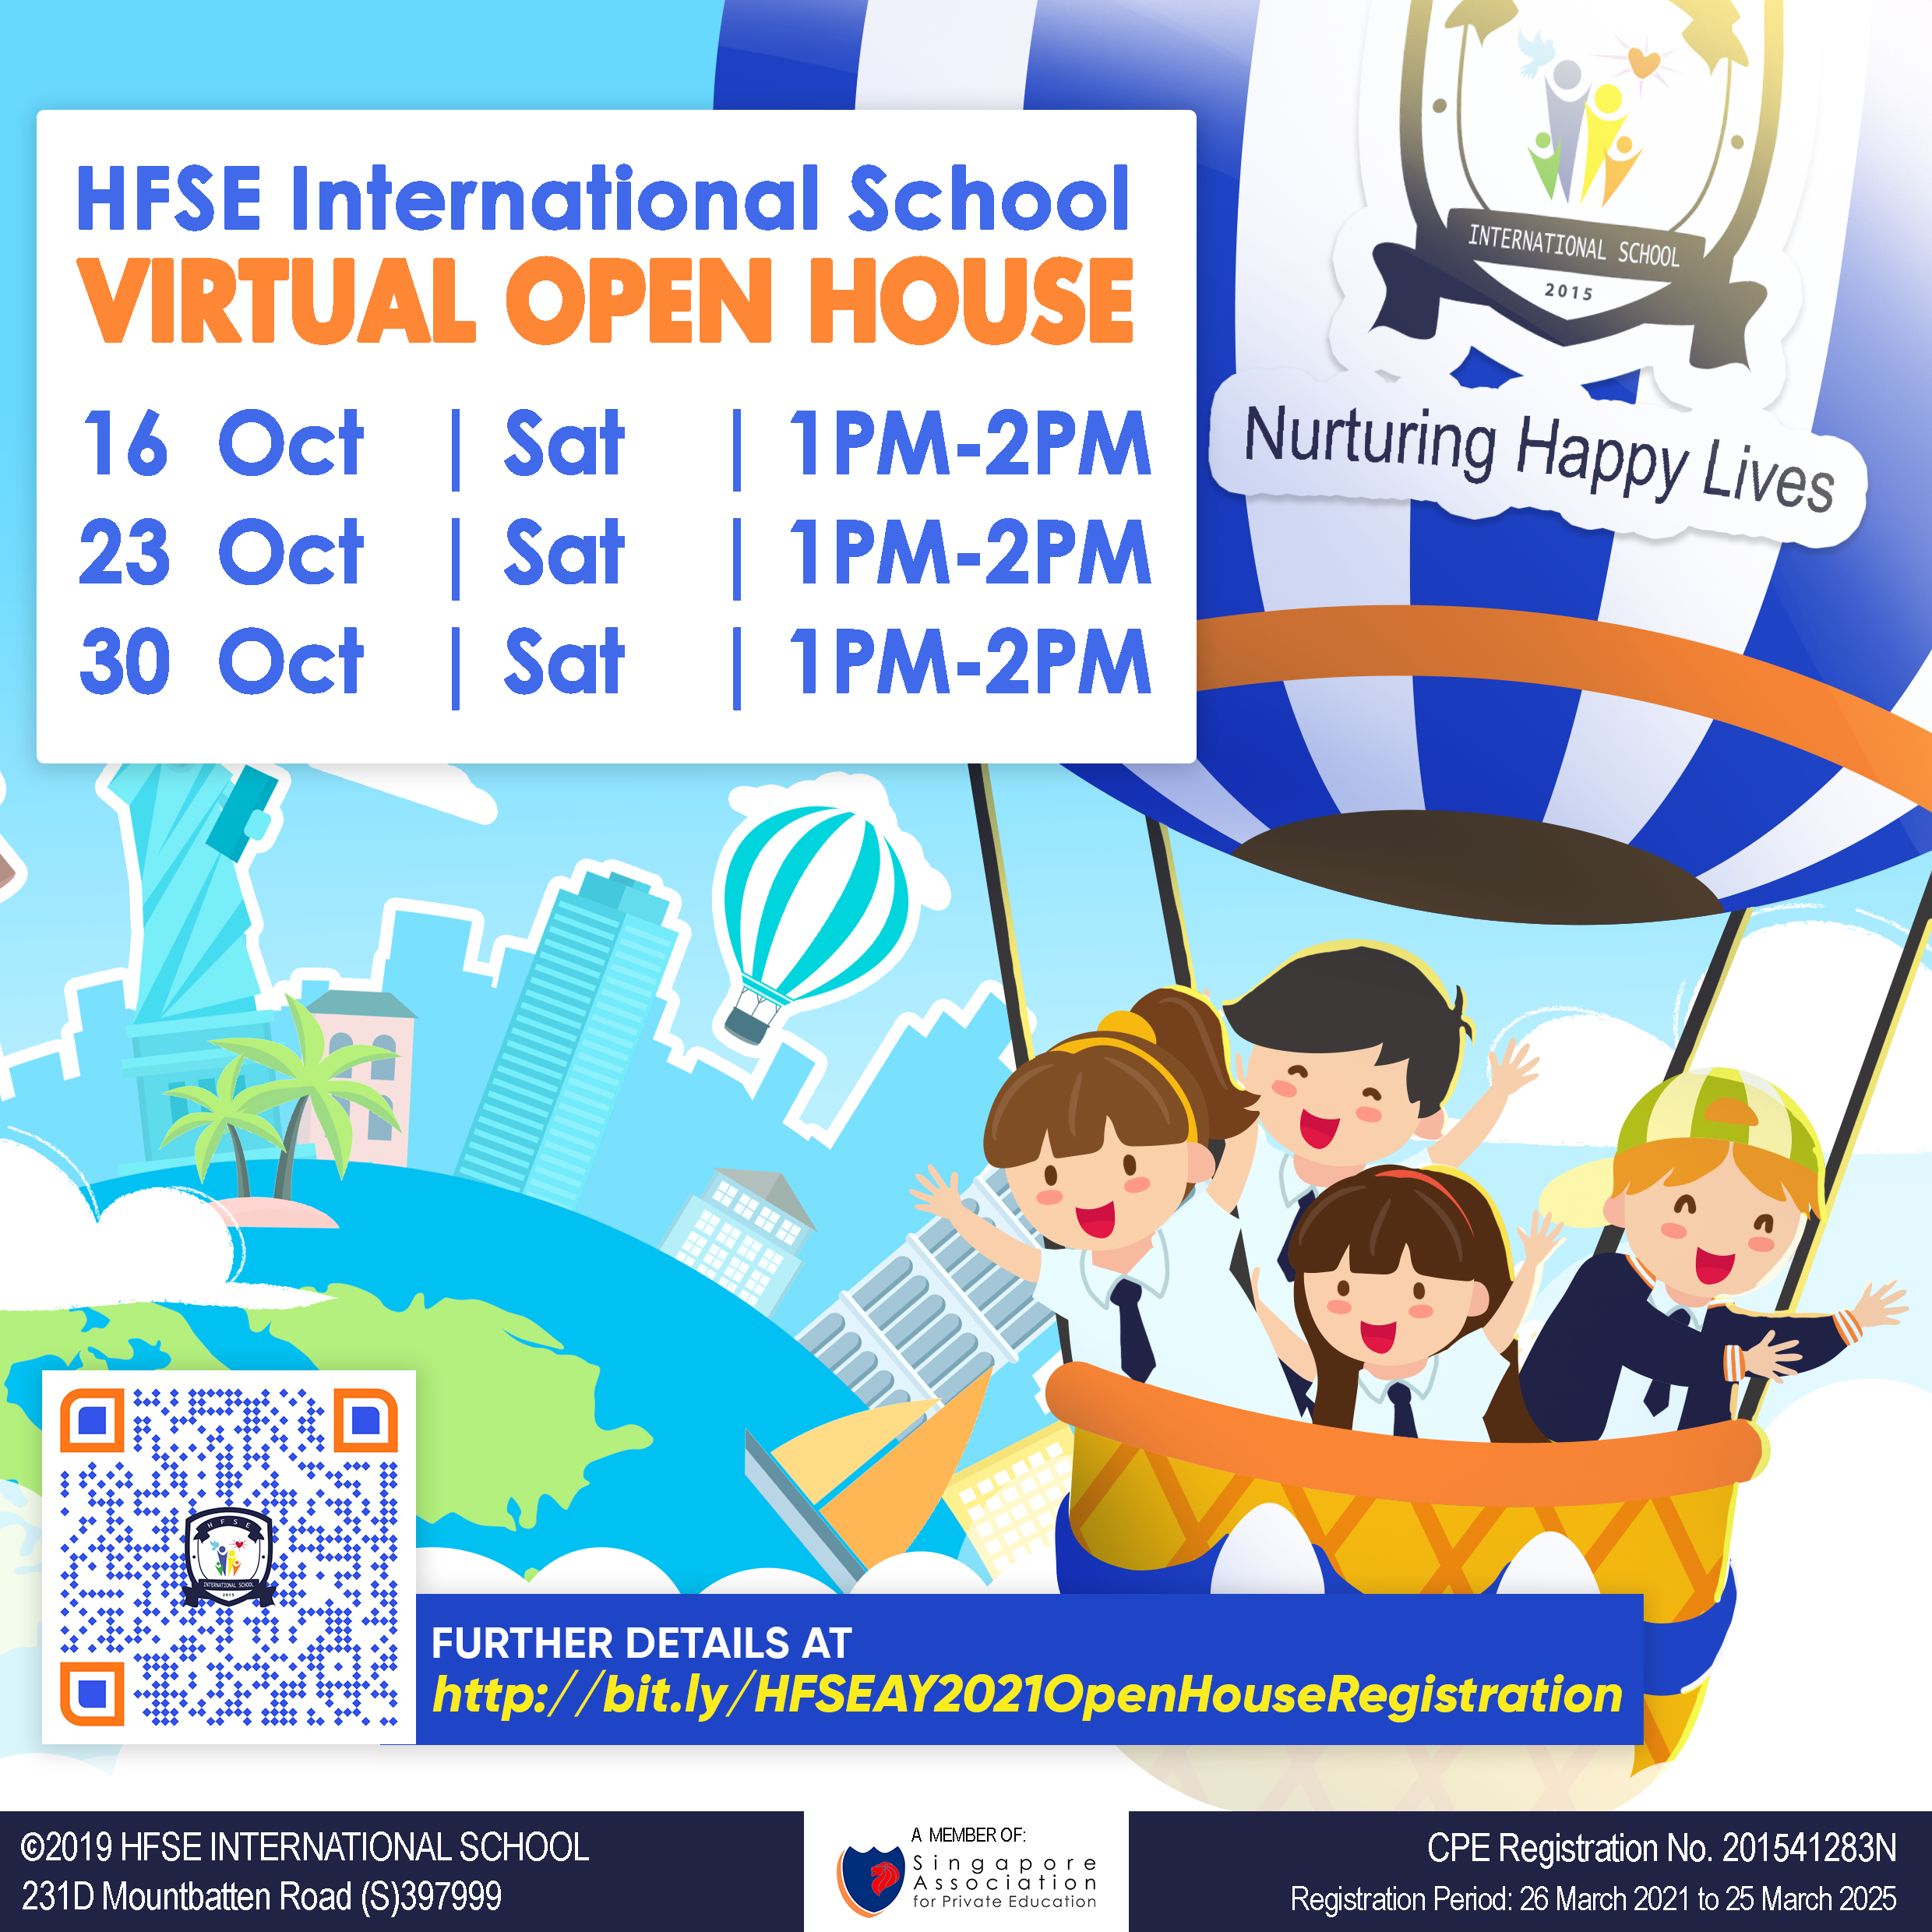 Home Hfse International School